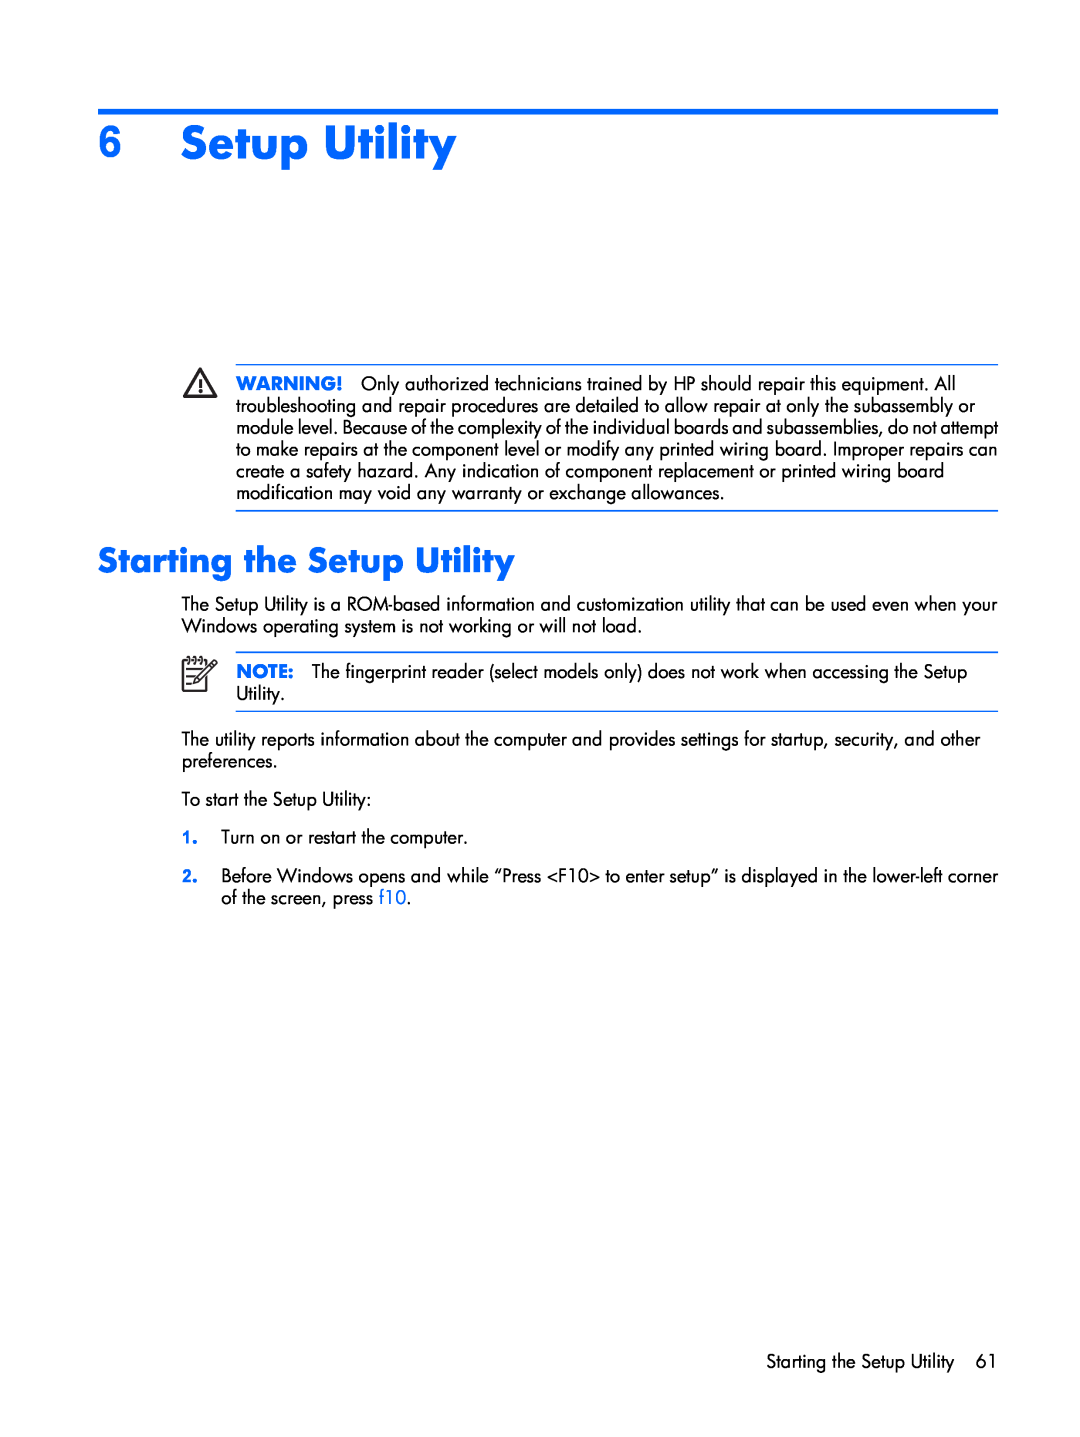 Compaq F500 manual Starting the Setup Utility 